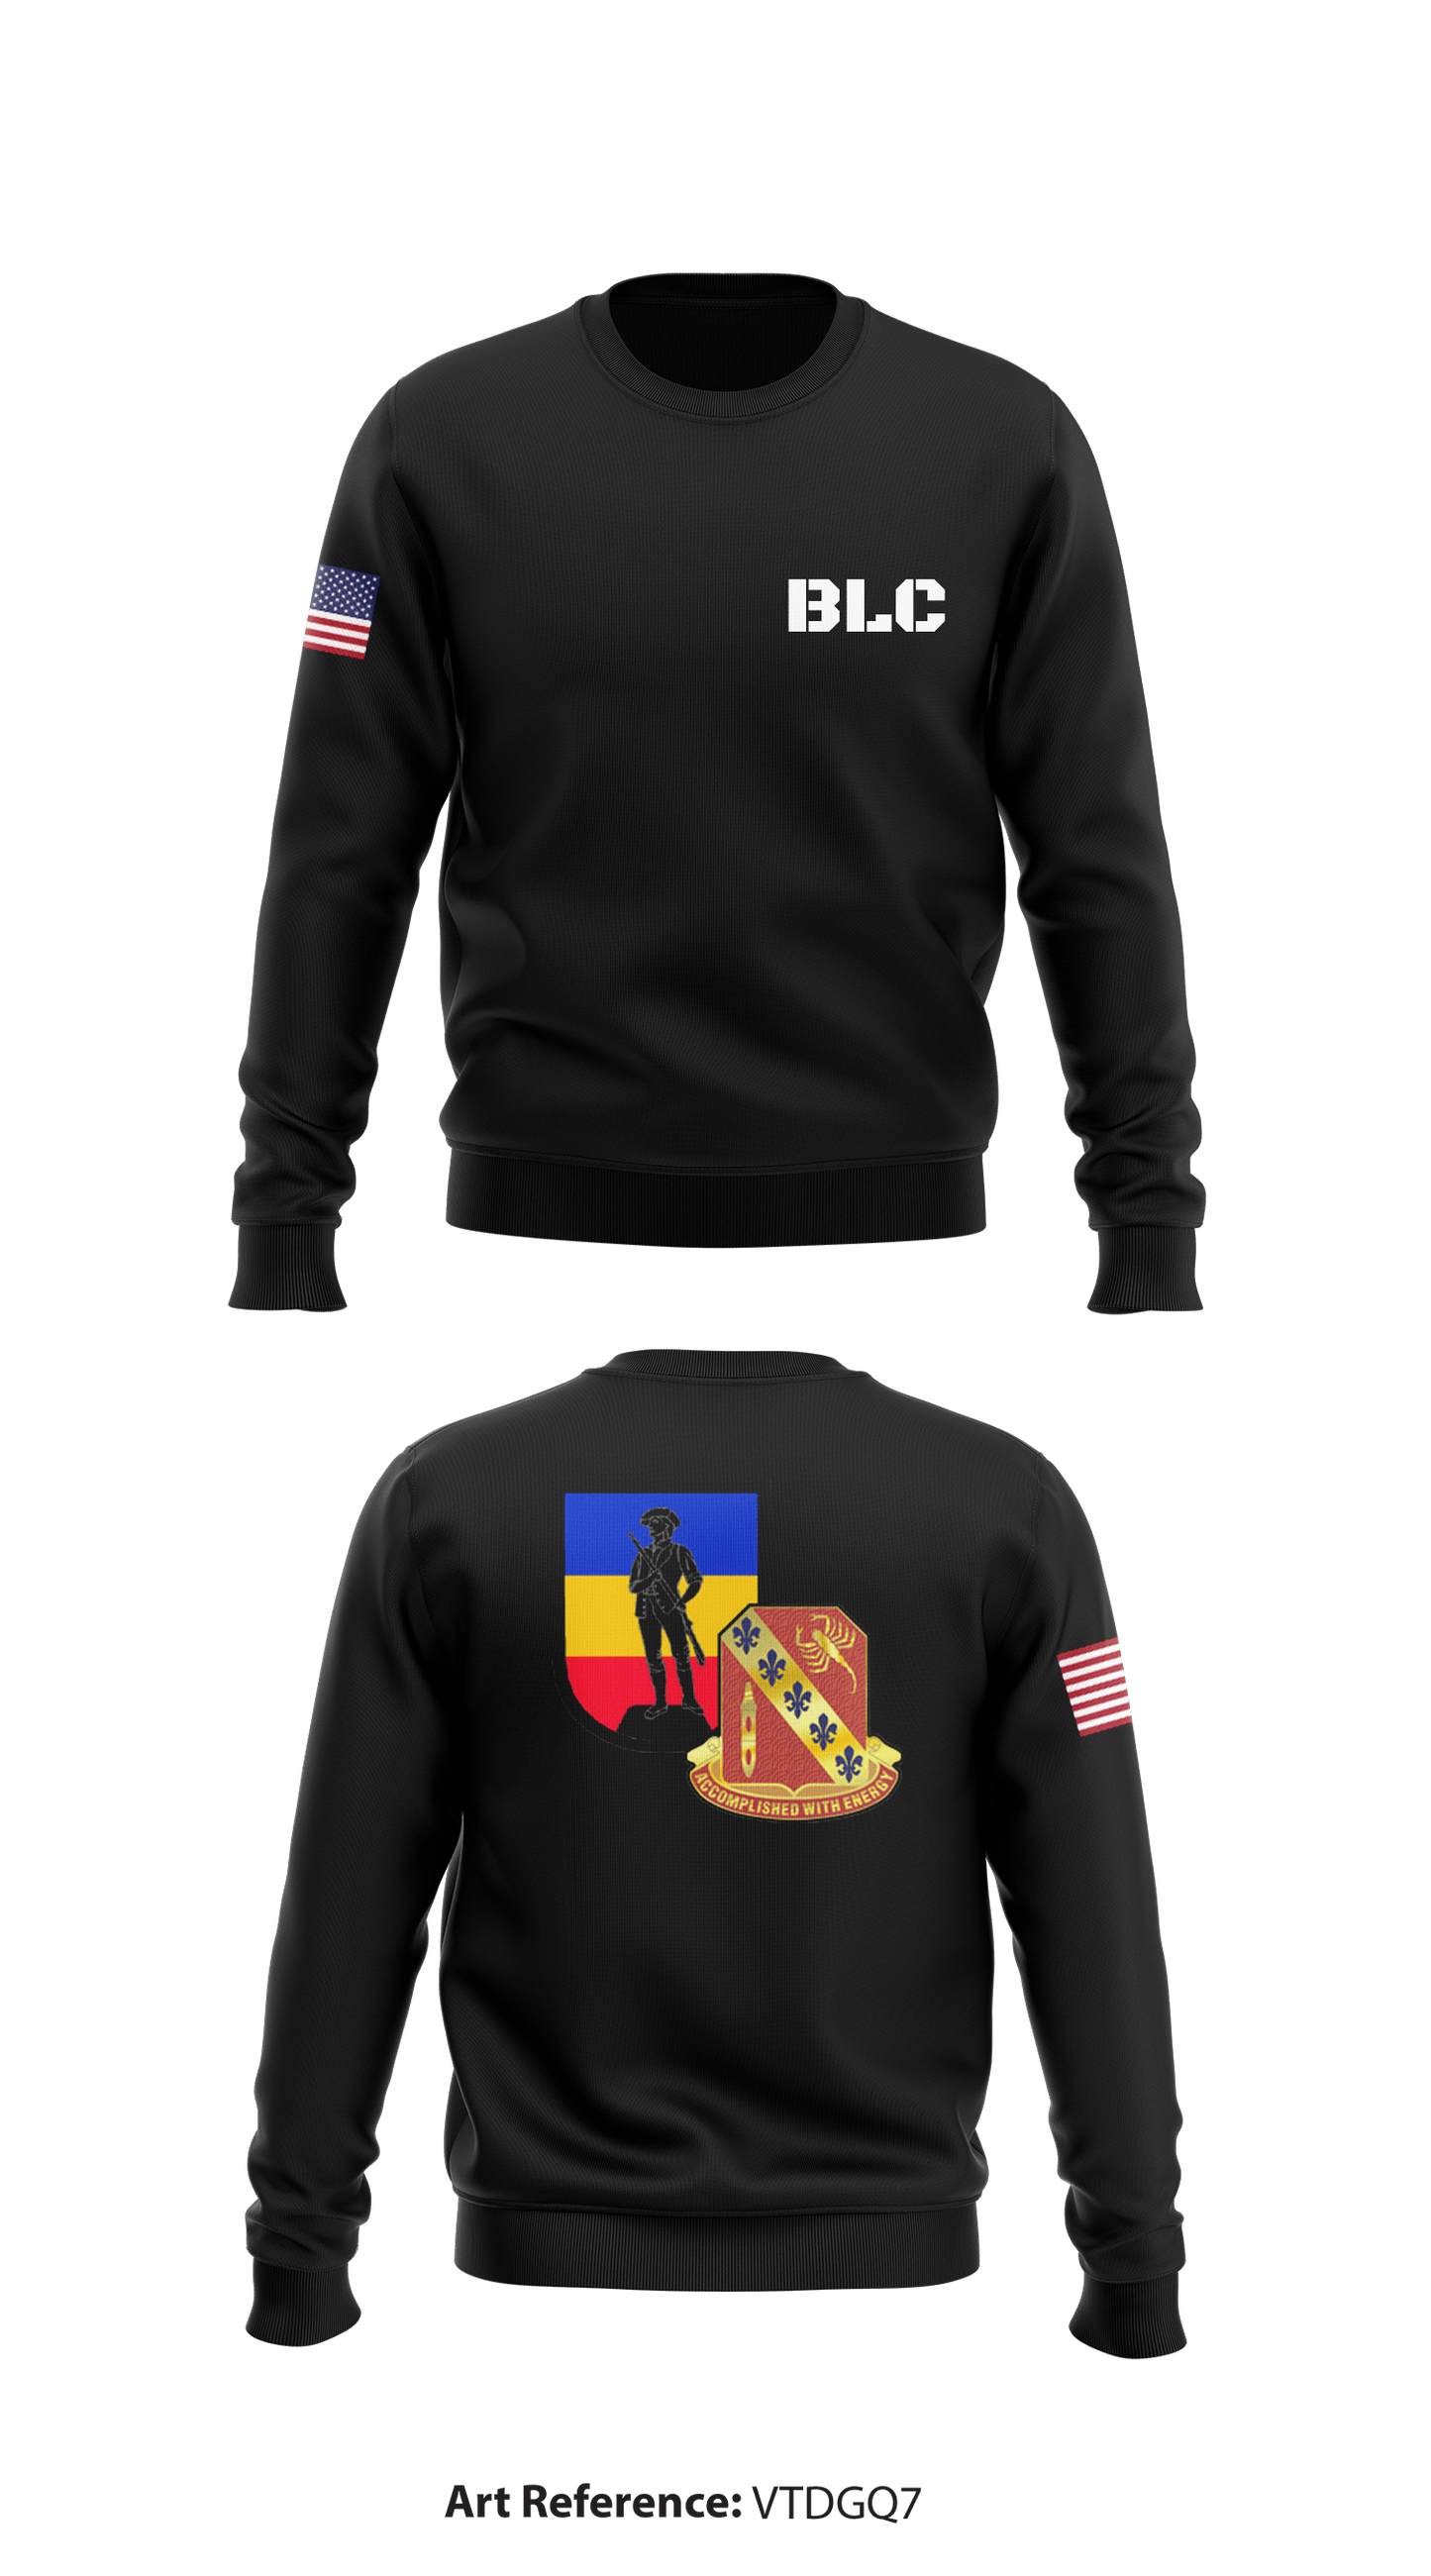 168th RTI Regiment (BLC) Store 1 Core Men's Crewneck Performance Sweatshirt - VtdGQ7